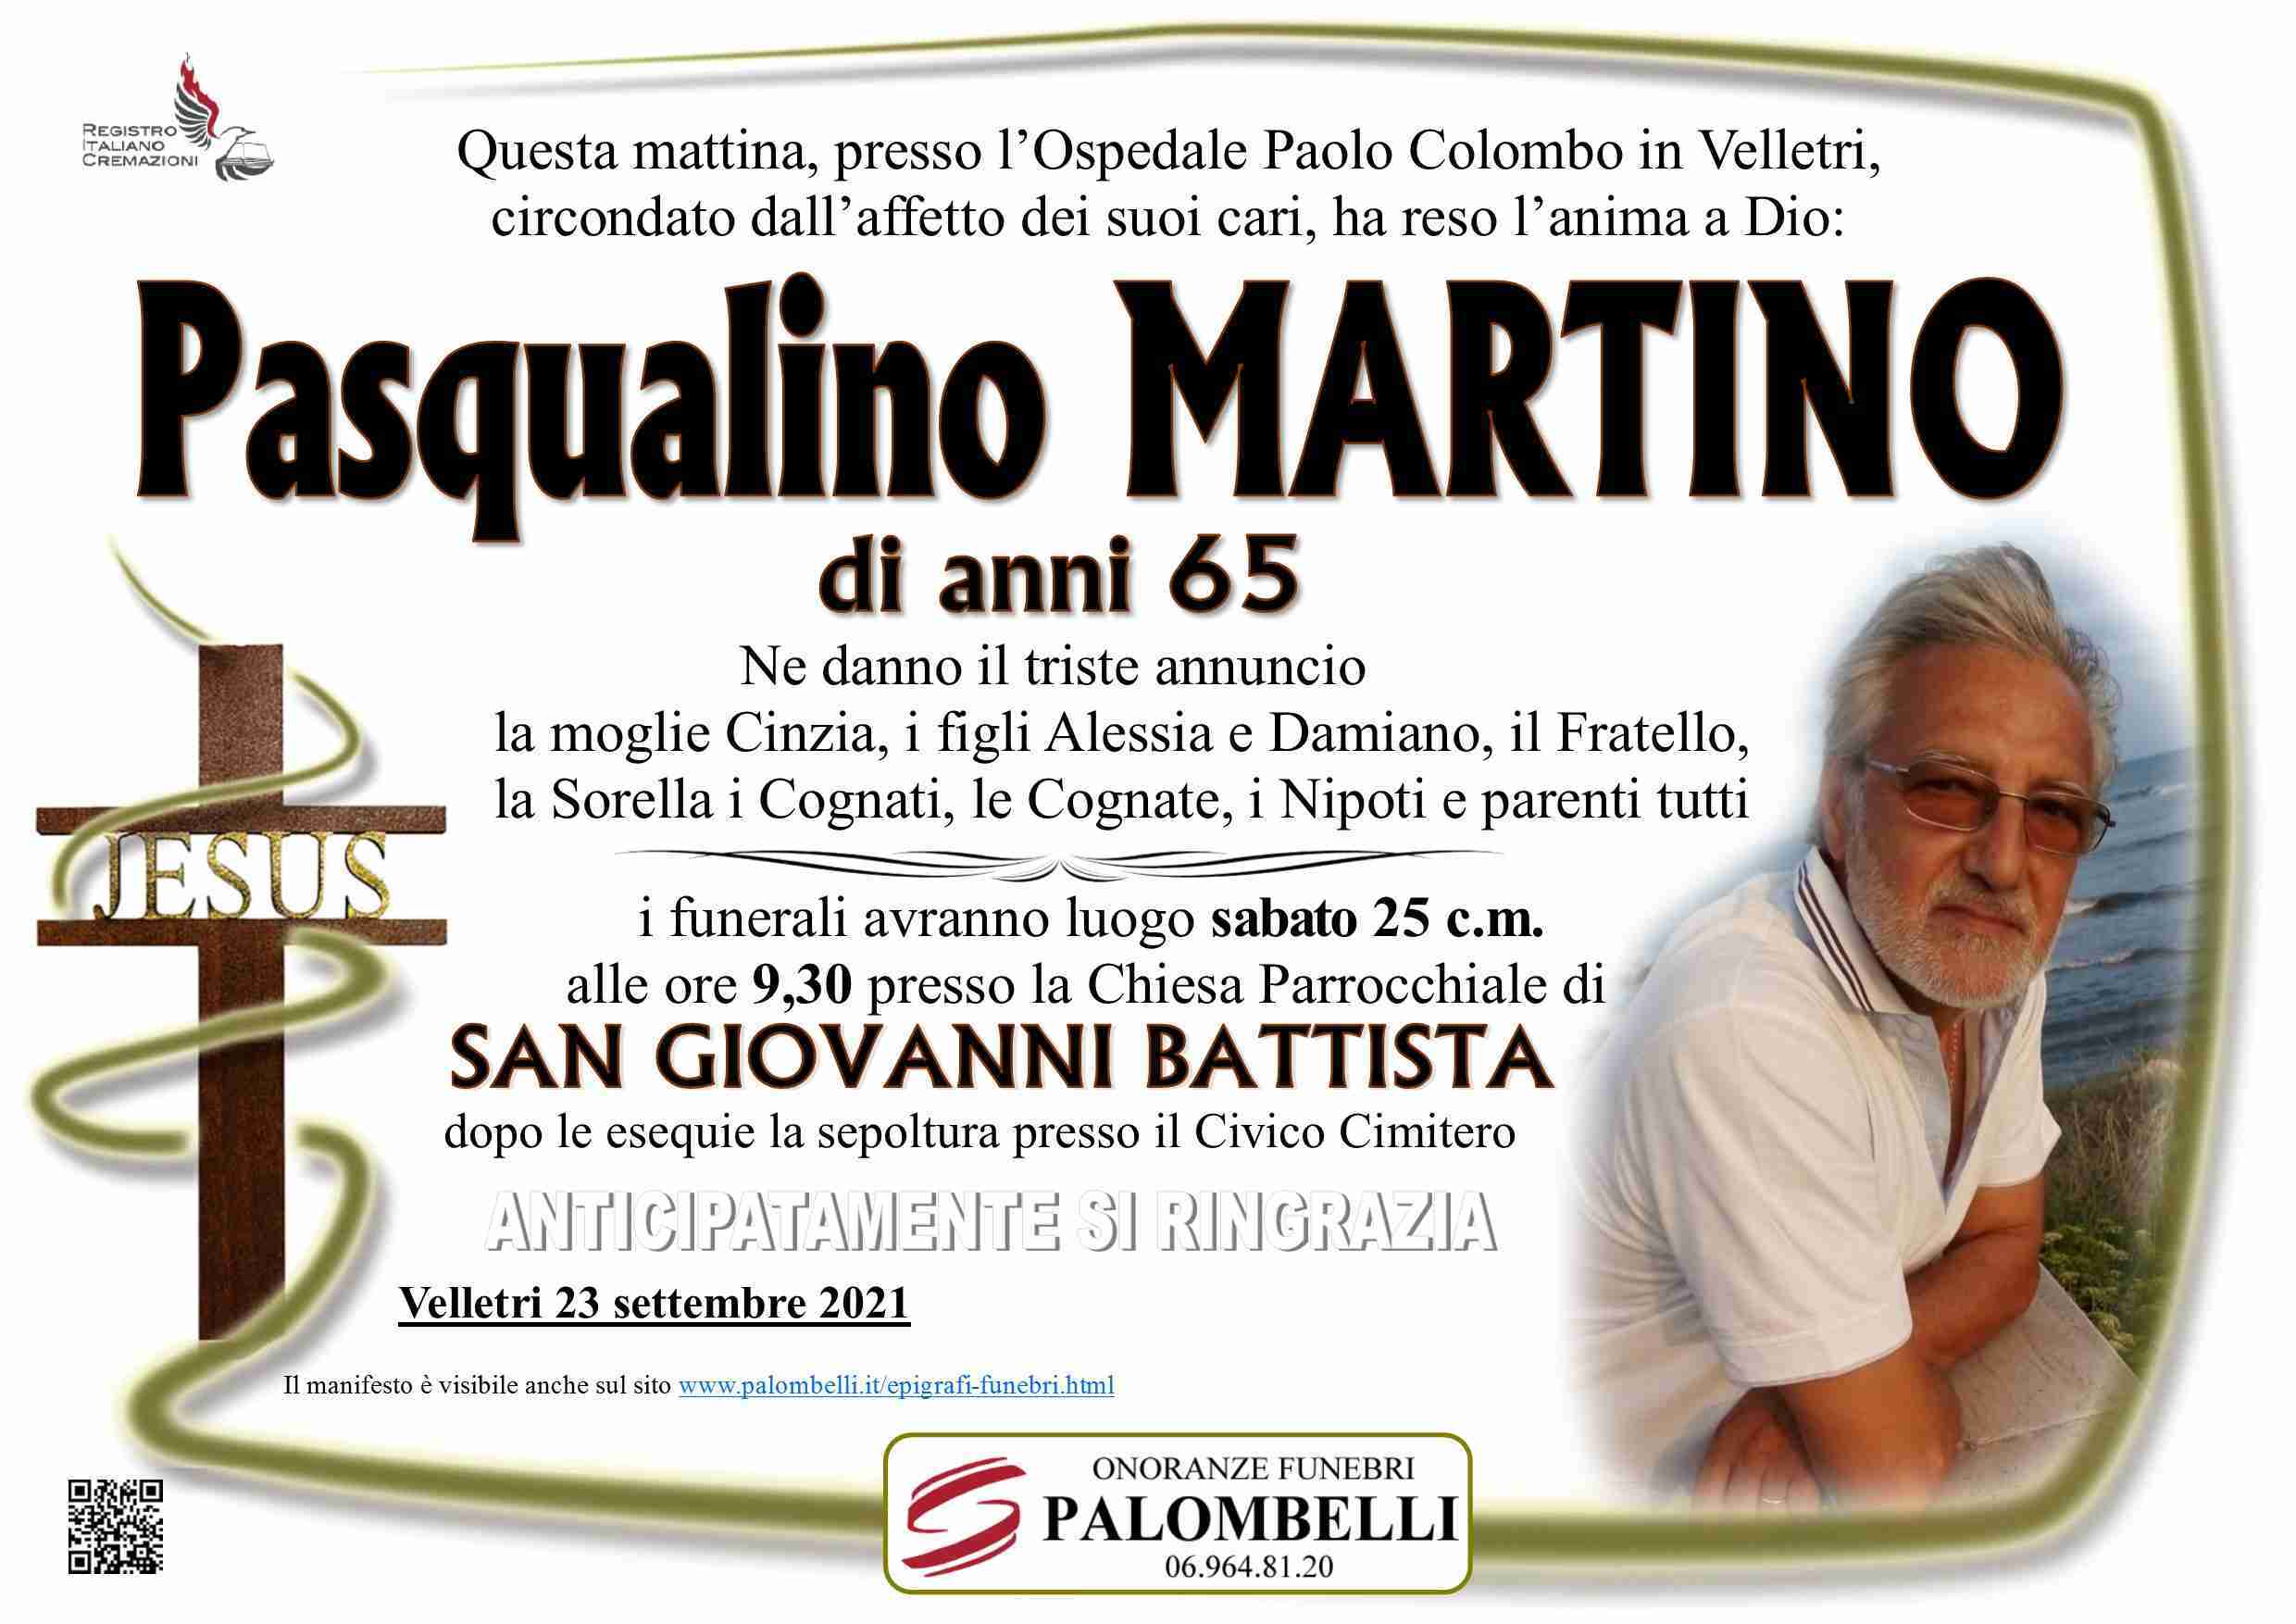 Pasqualino Martino